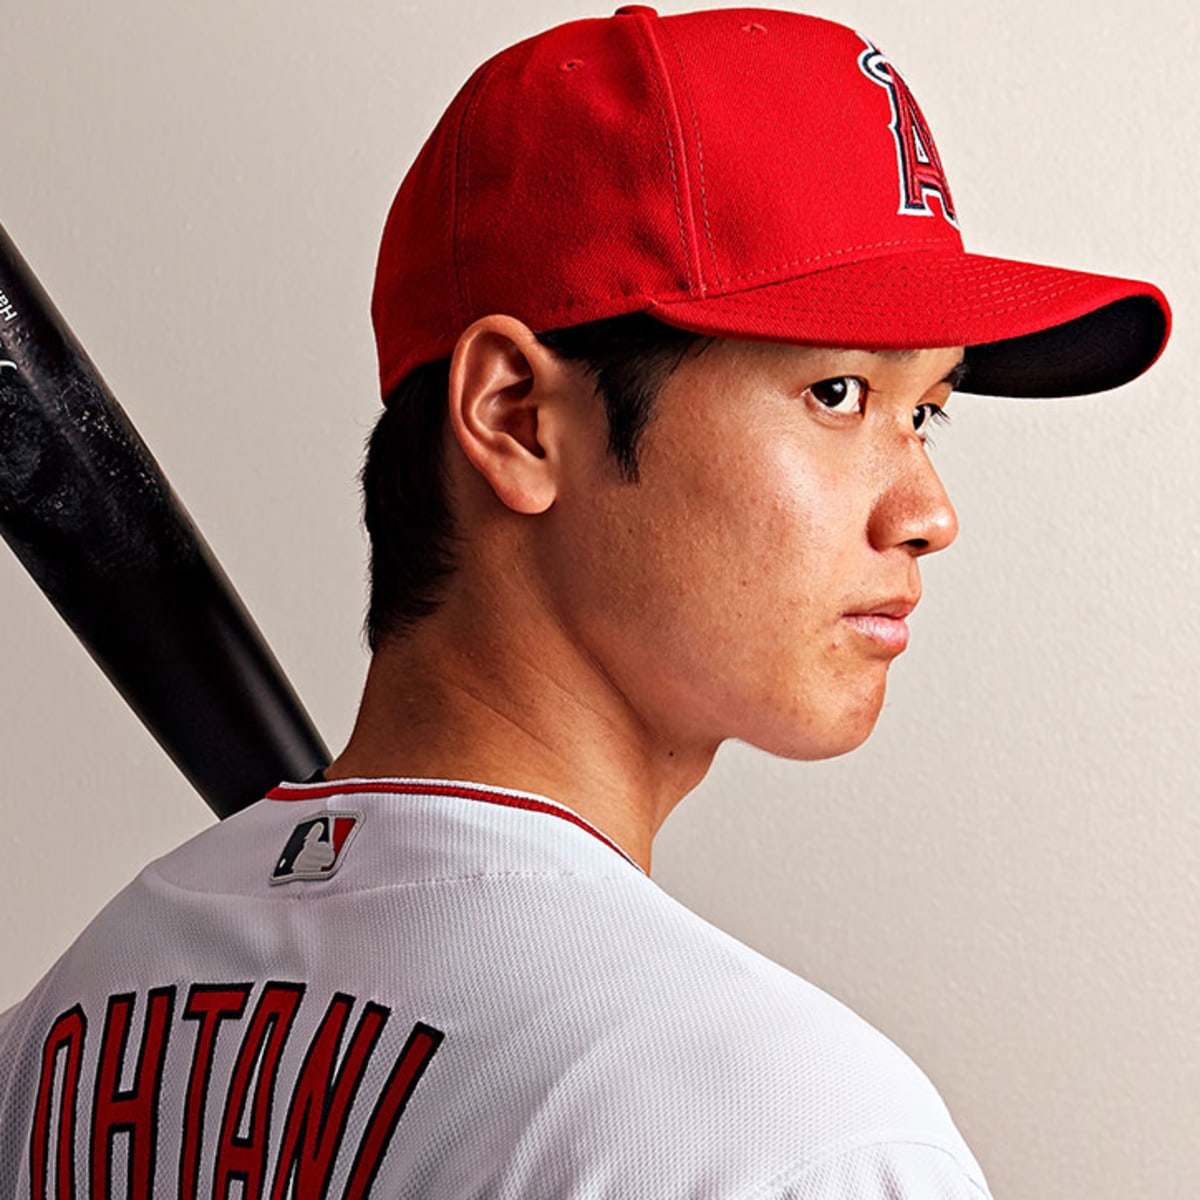 Shohei Ohtani hits record-breaking 162-foot high home run; Angels